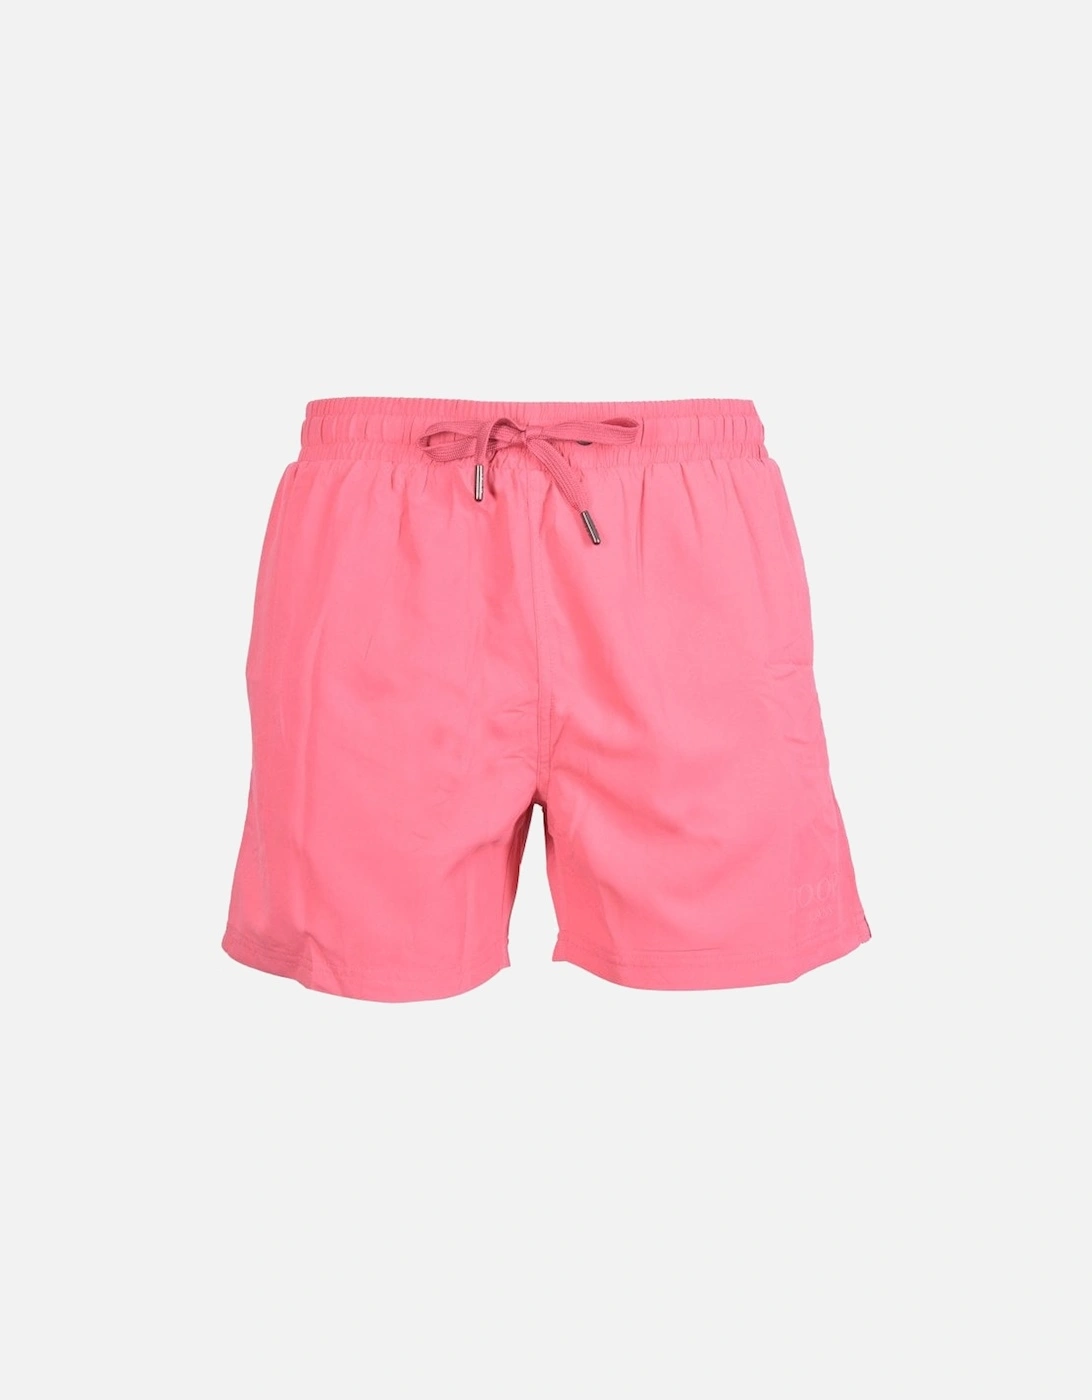 Jeans South Beach Swim Shorts, Soft Pink